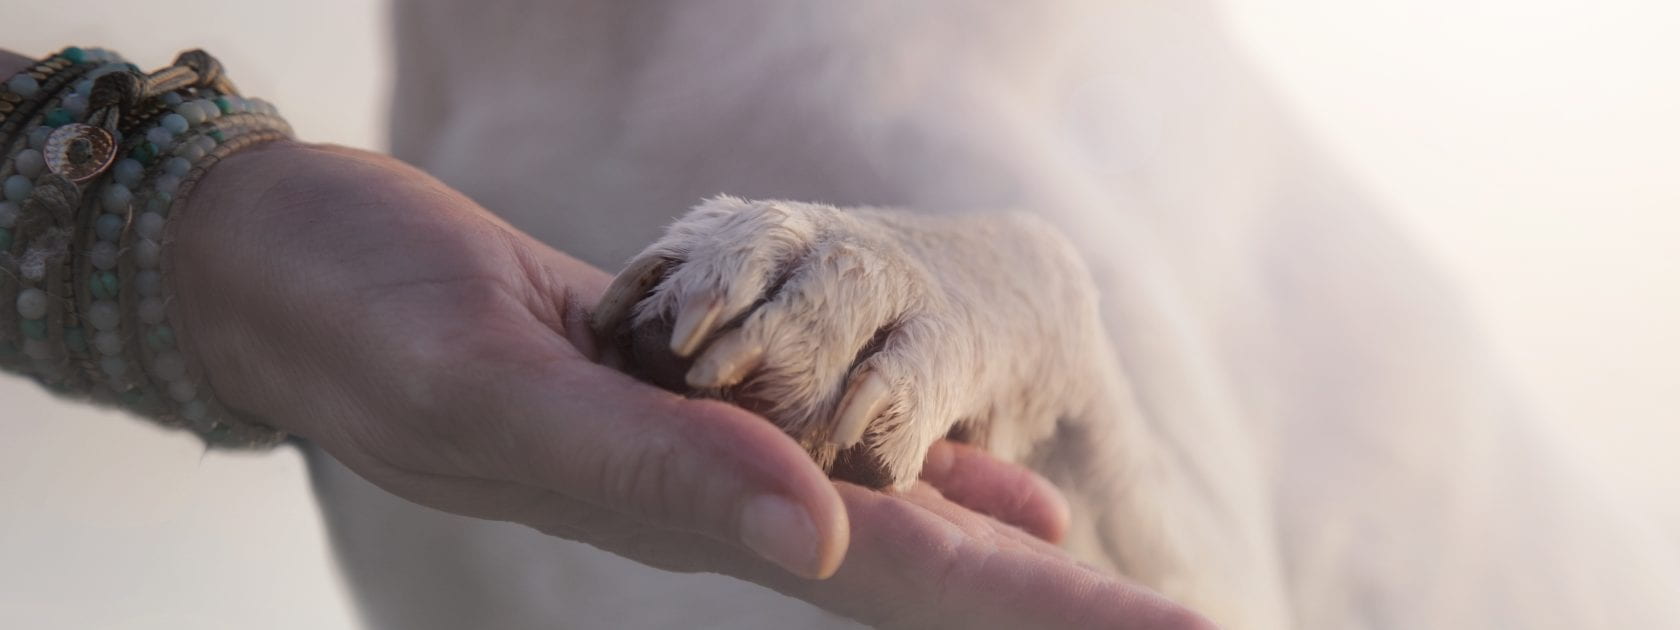 Dog putting paw on someone's hand